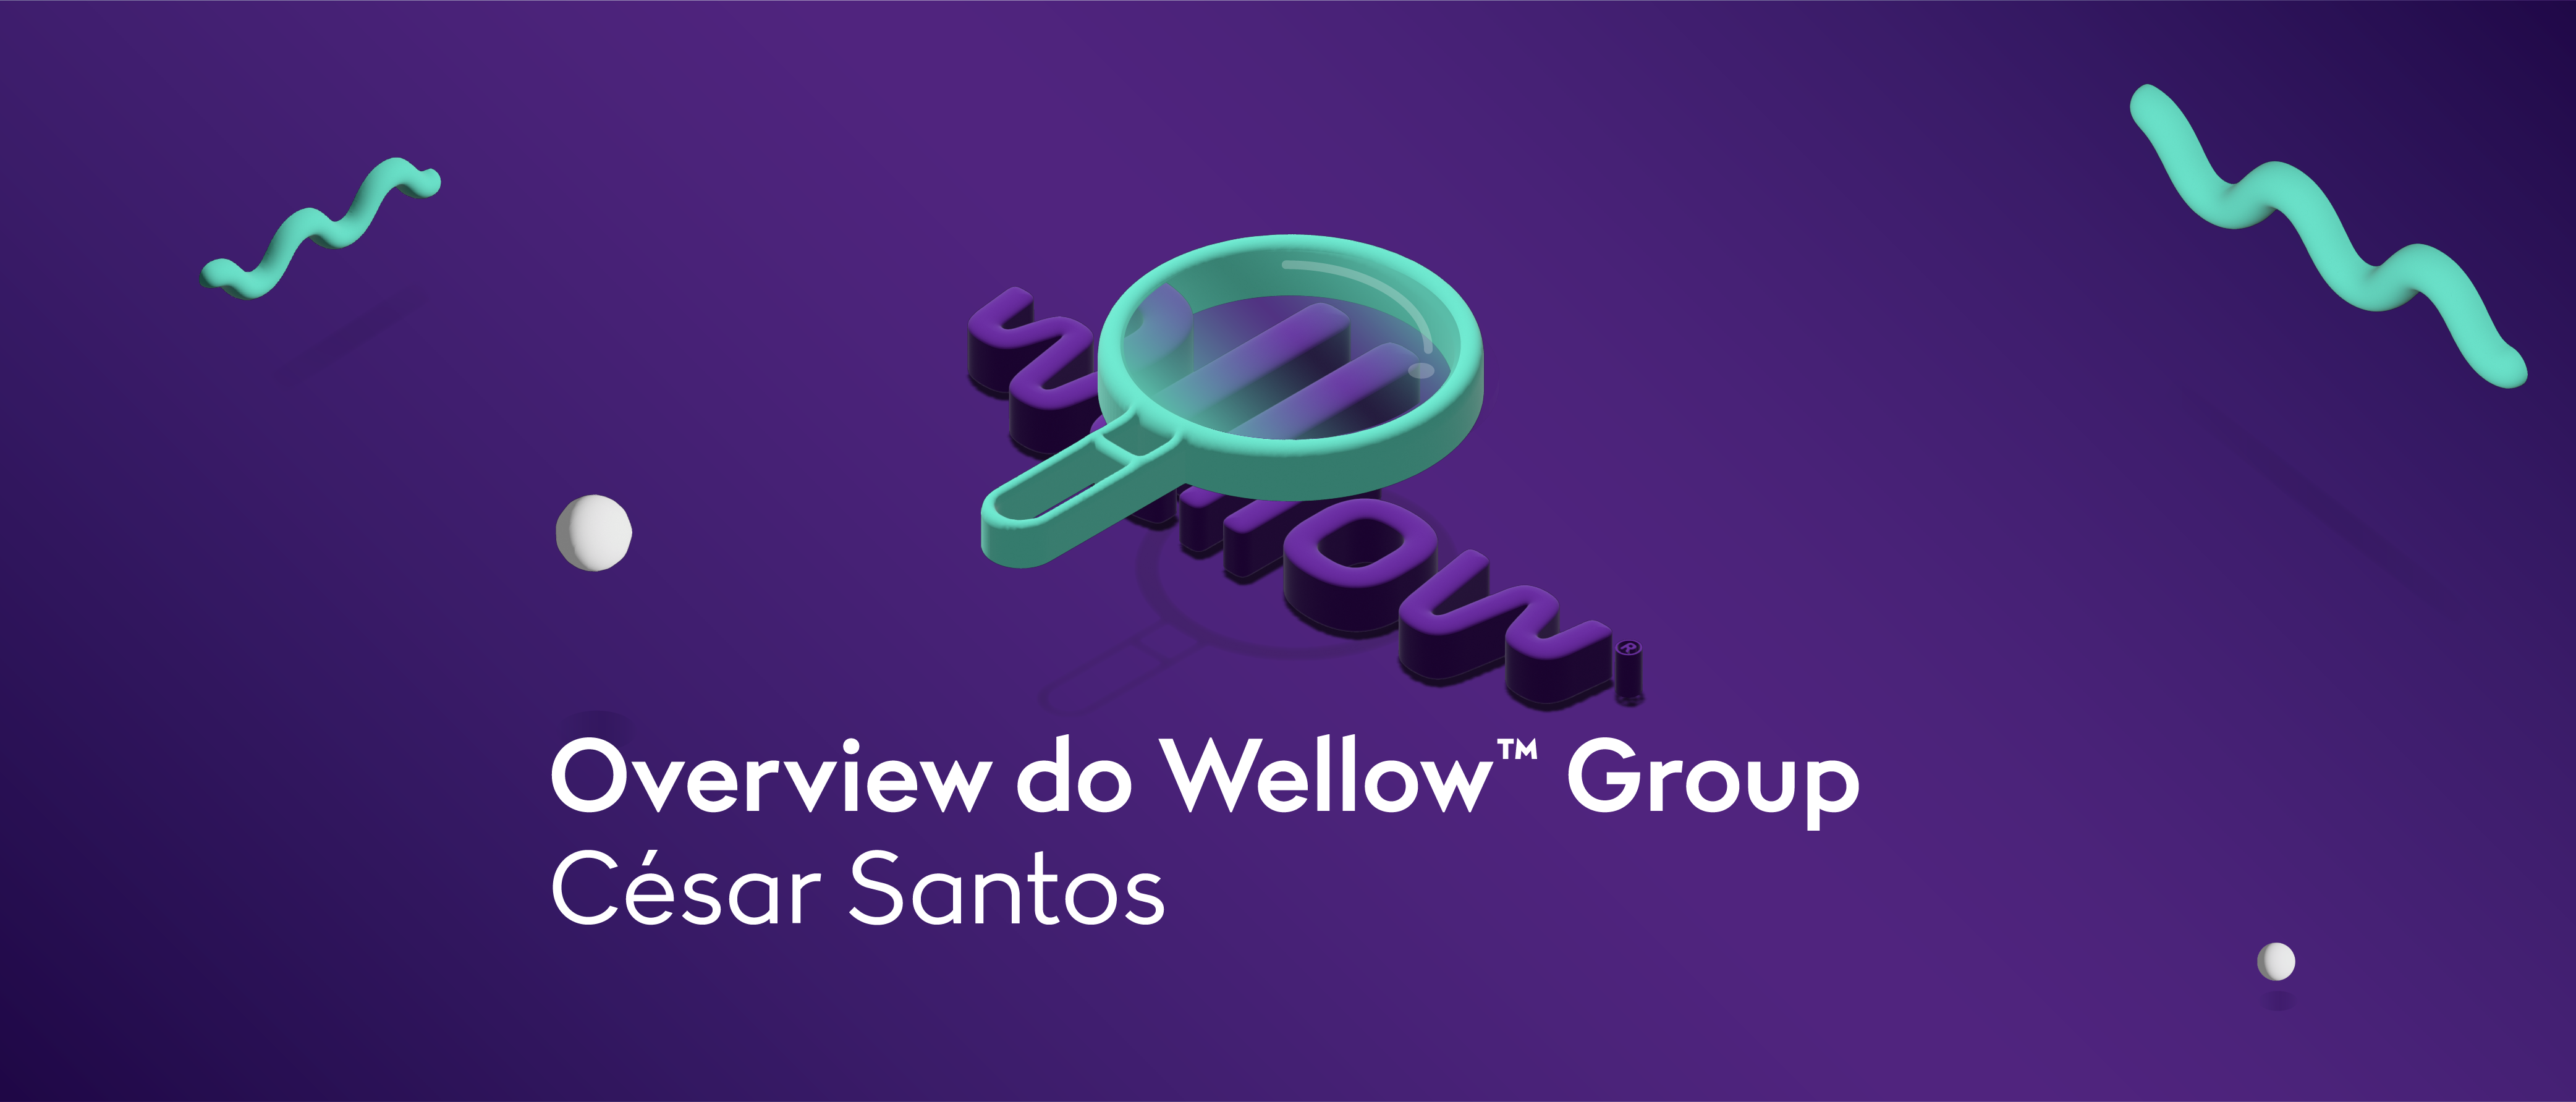 Banner Artigos de Opinião 4168x1782px Tema 2 Overview do Wellow(tm) Group César Santos